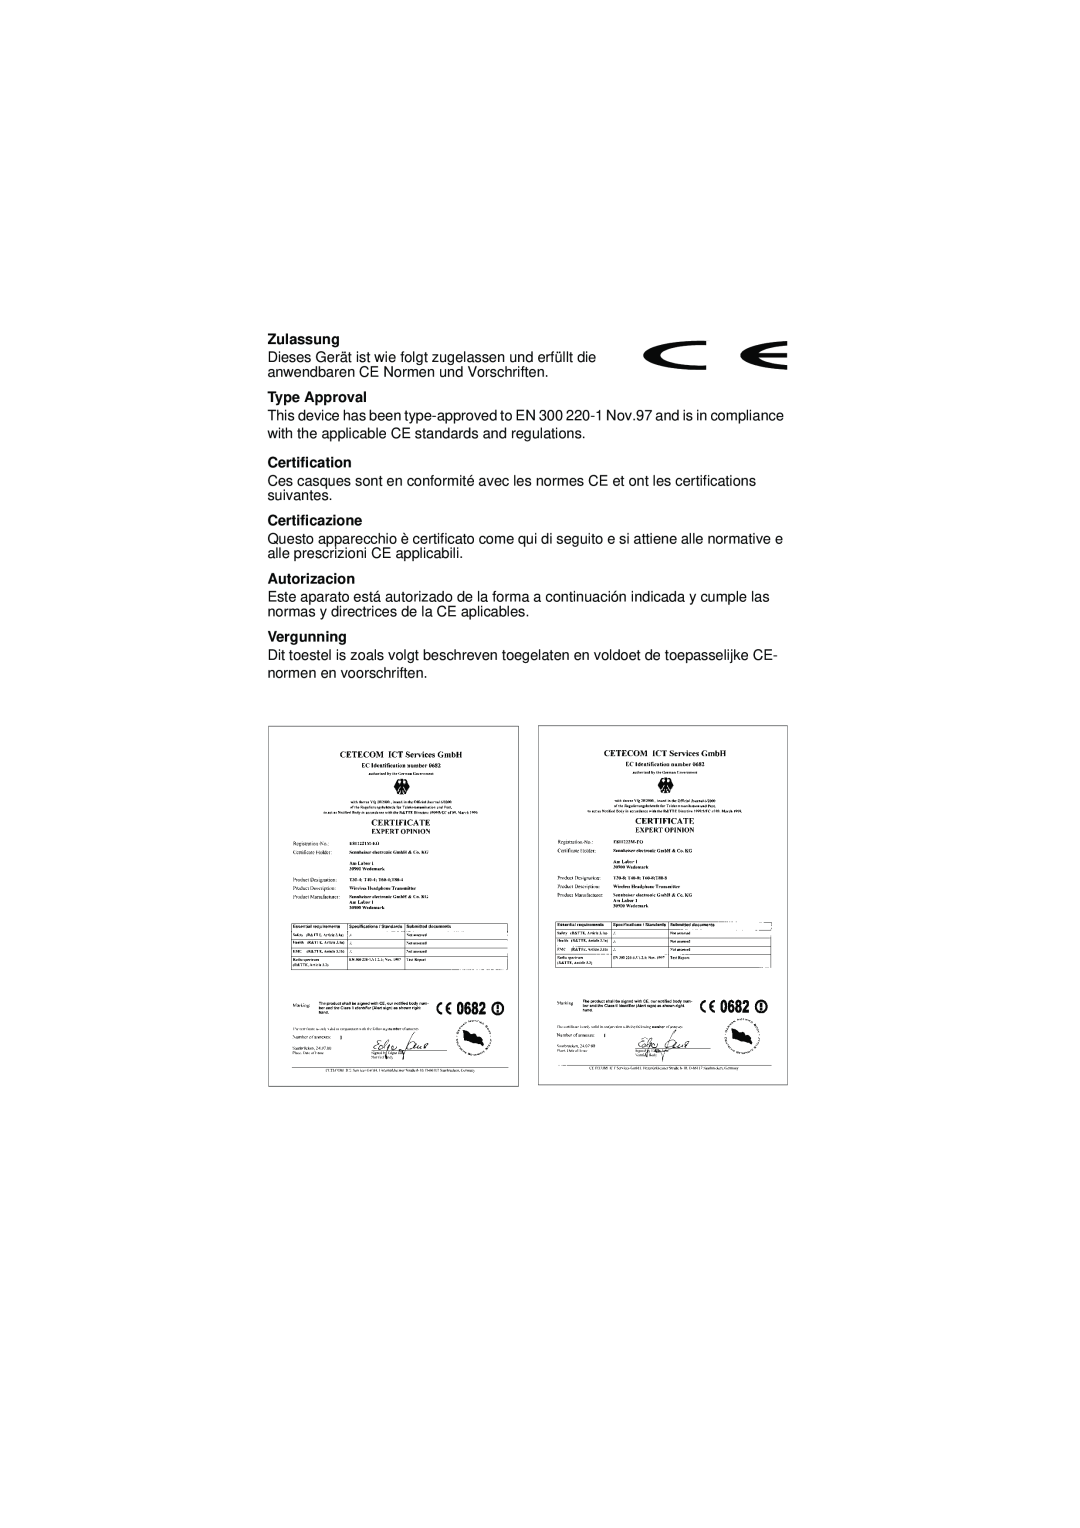 Sennheiser RS 40 instruction manual Zulassung, Type Approval, Certification, Certificazione, Autorizacion, Vergunning 